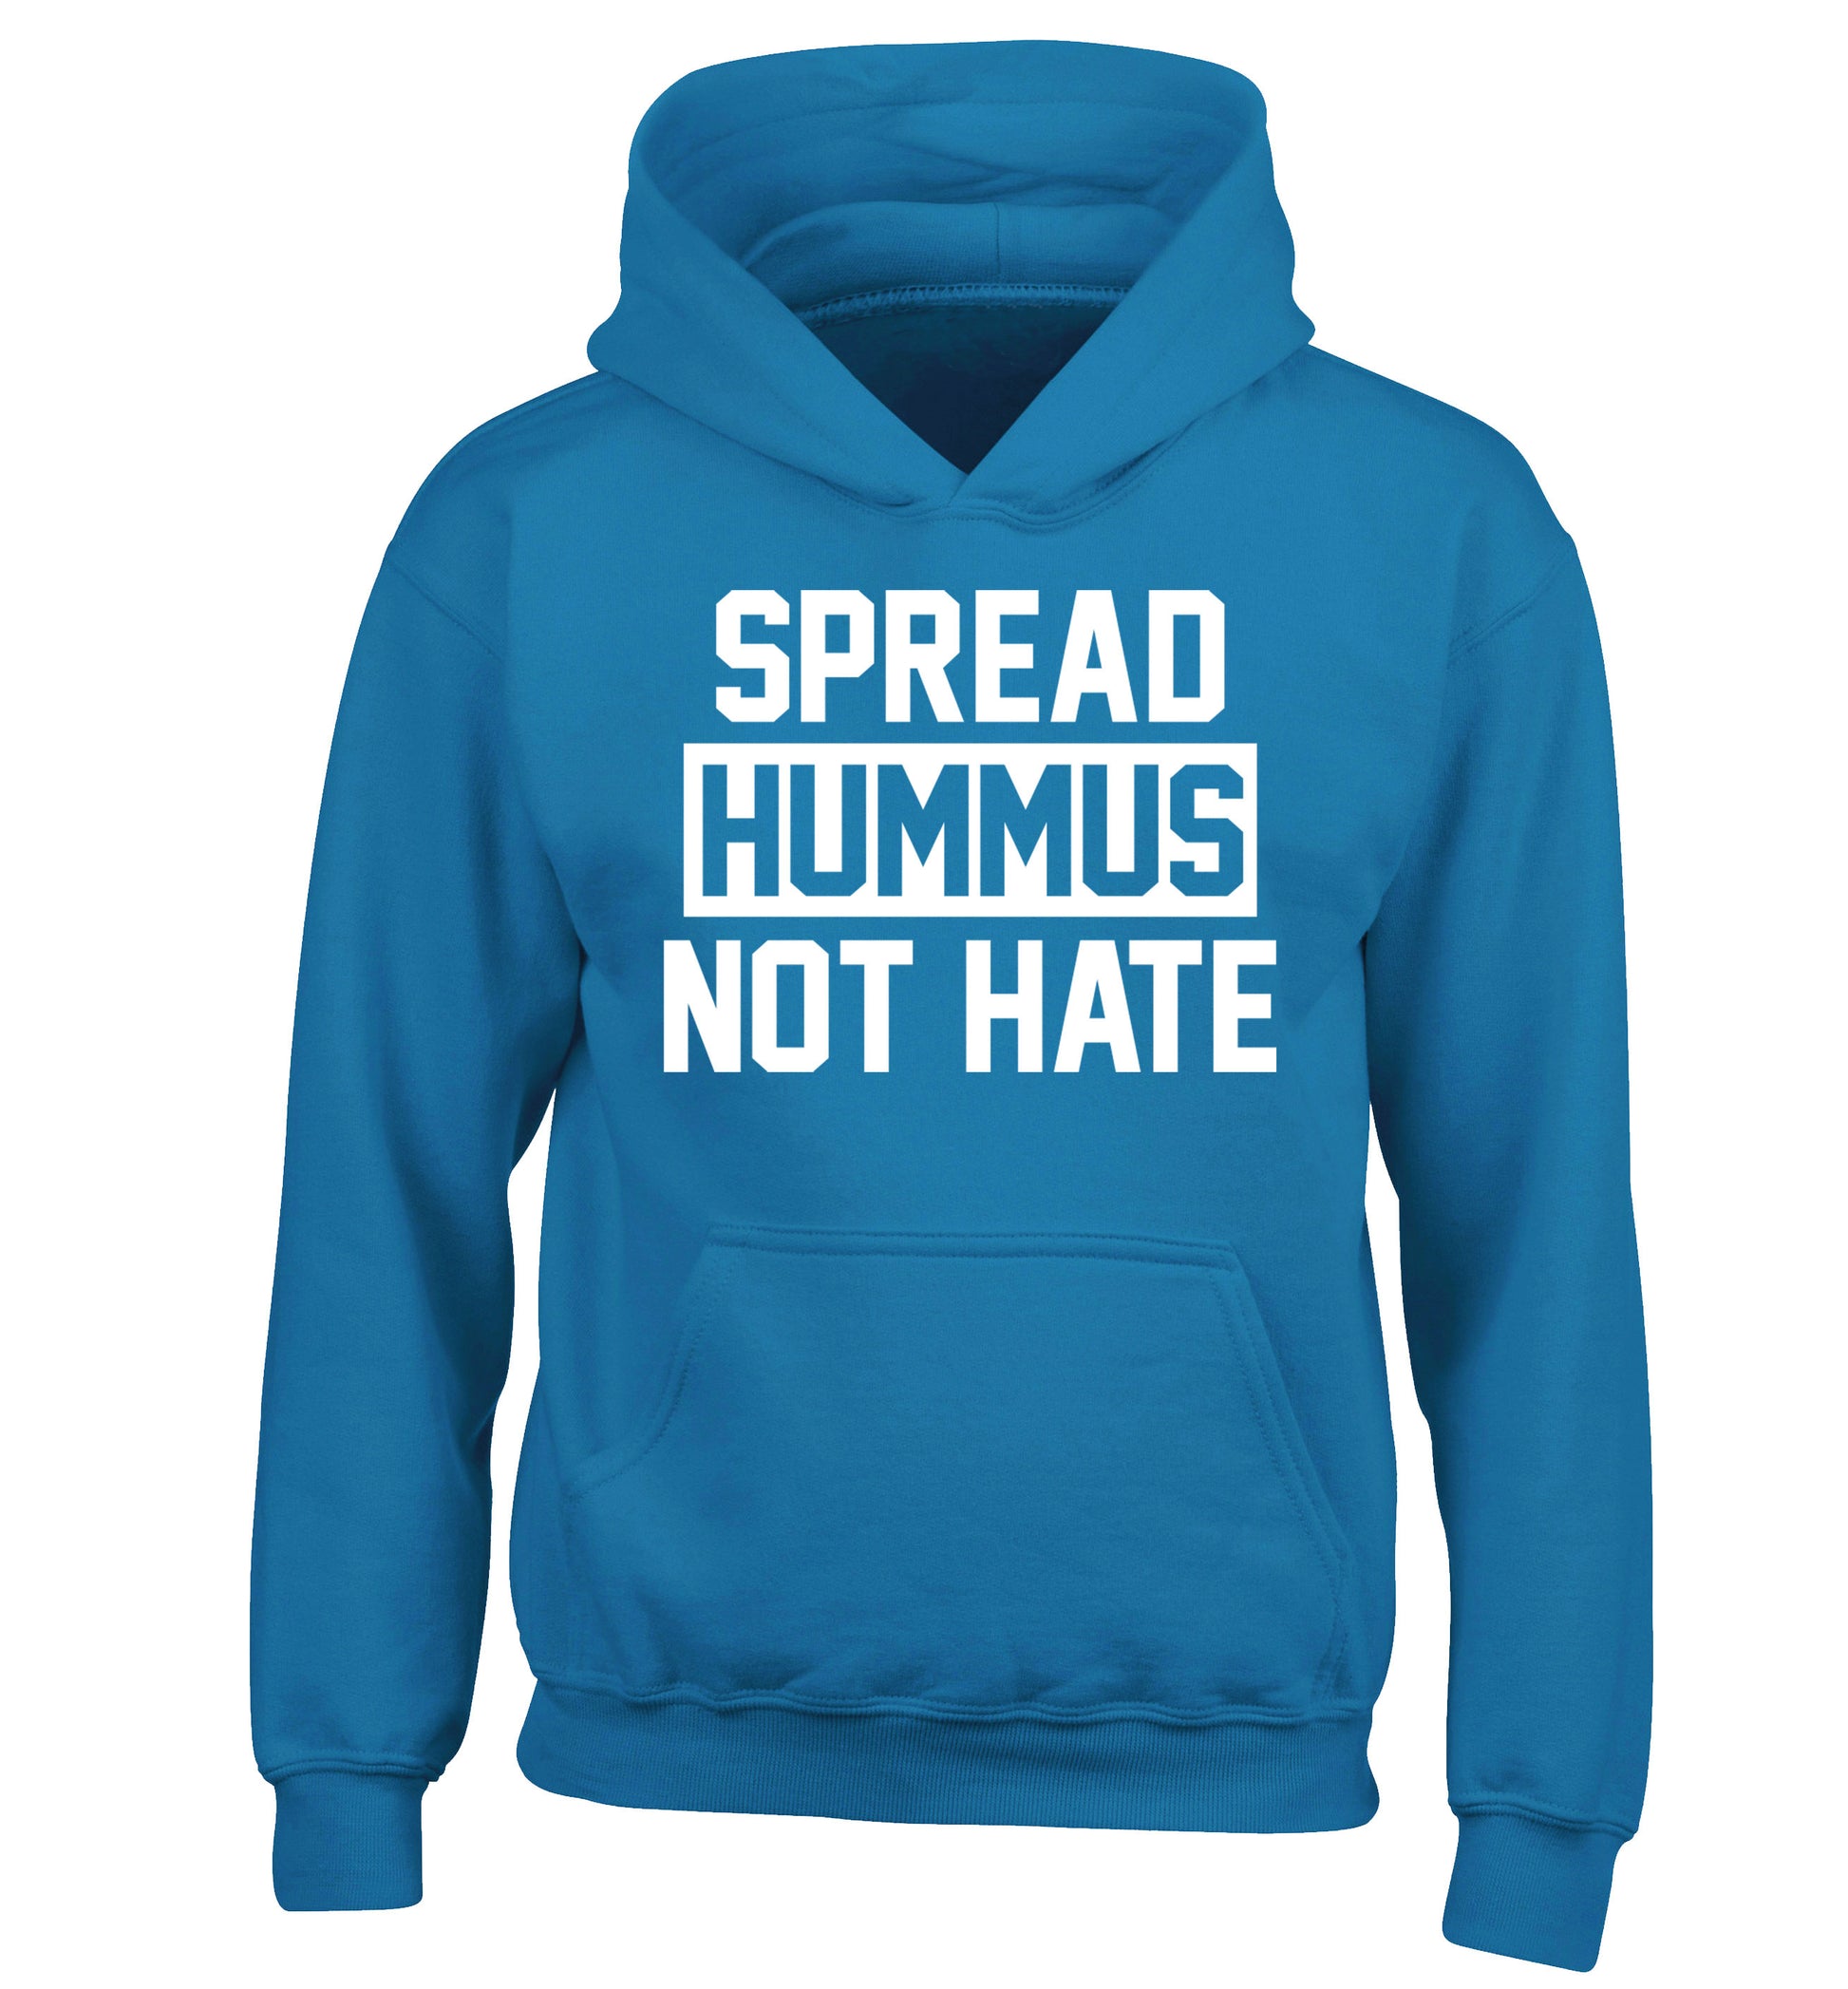 Spread hummus not hate children's blue hoodie 12-14 Years